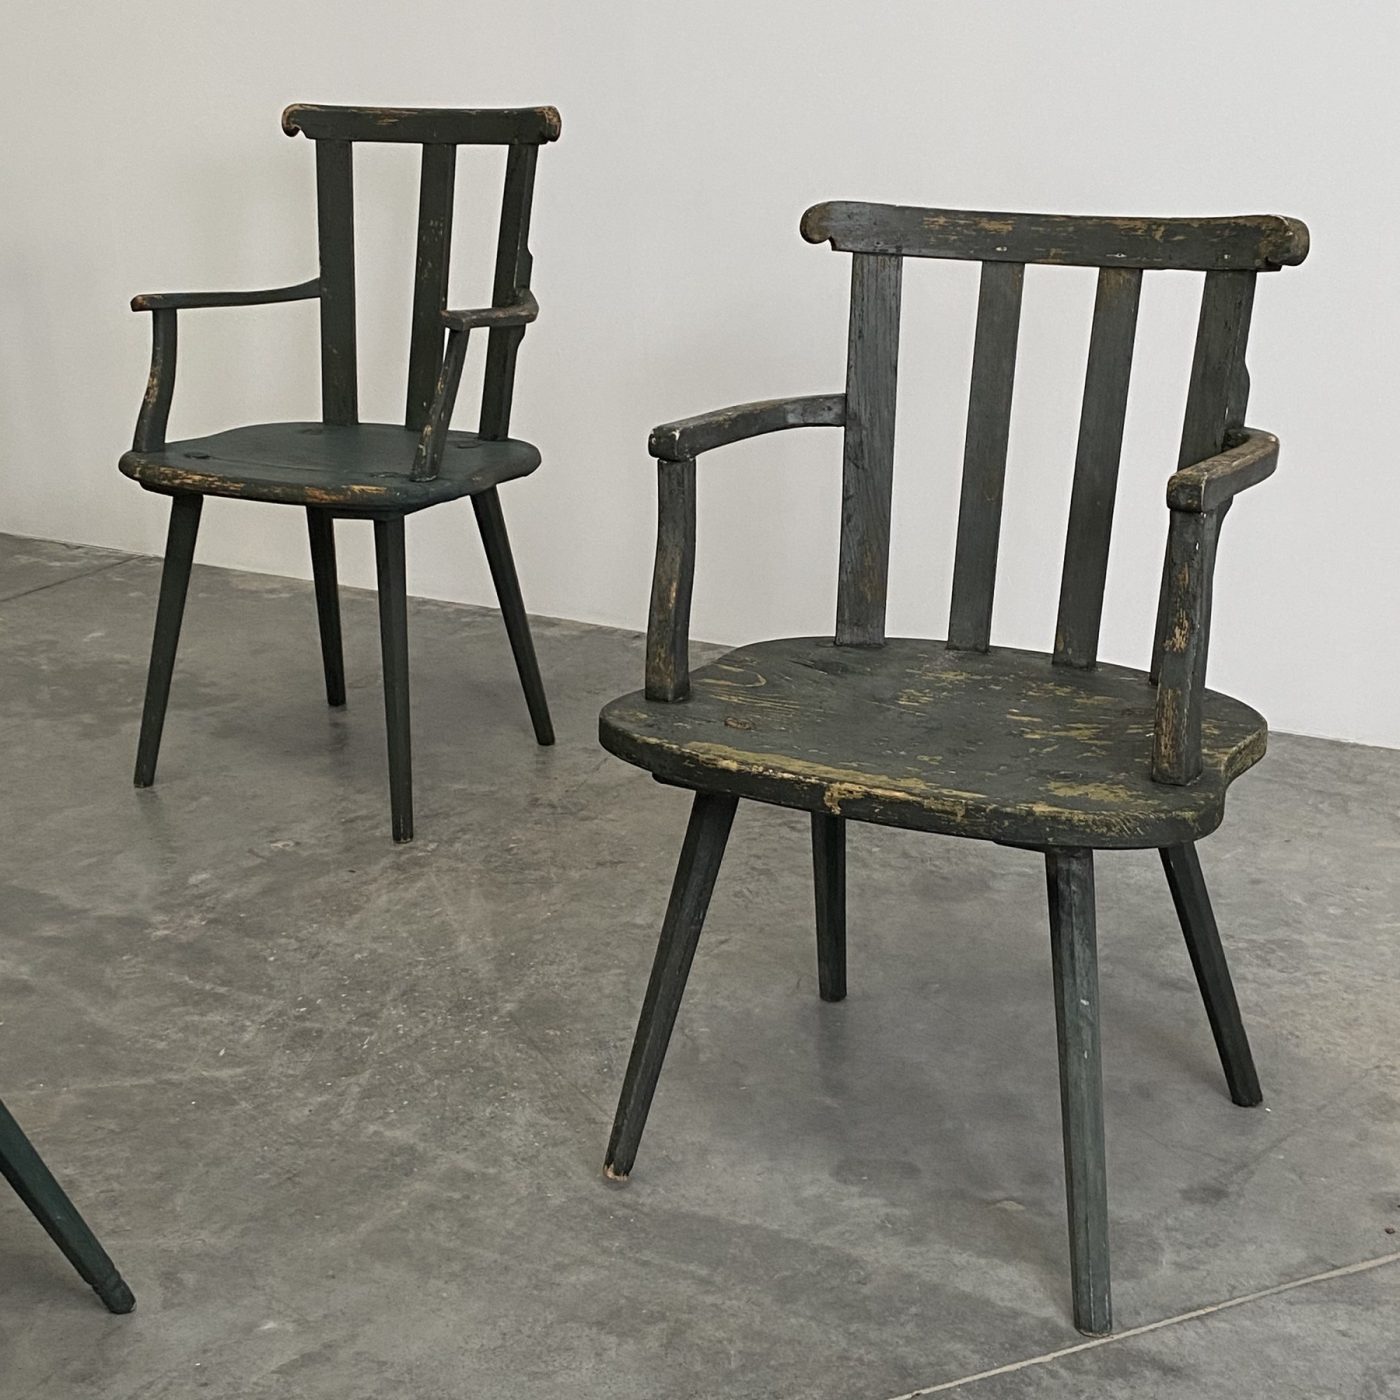 objet-vagabond-painted-chairs0001